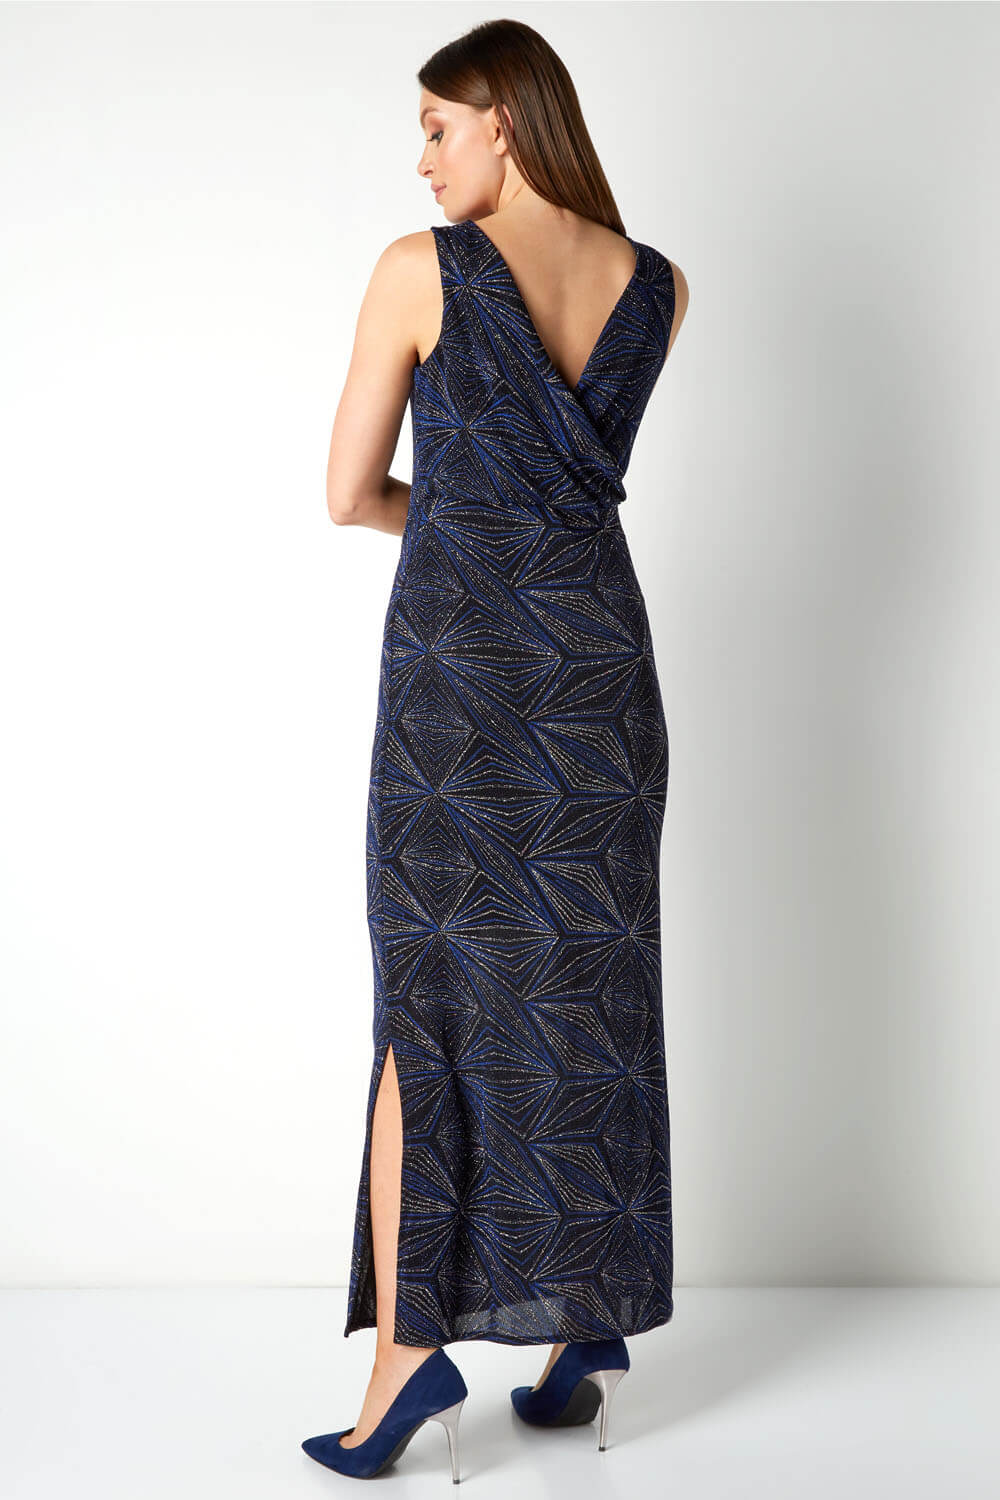 Blue Geometric Glitter Print Maxi Dress, Image 2 of 4